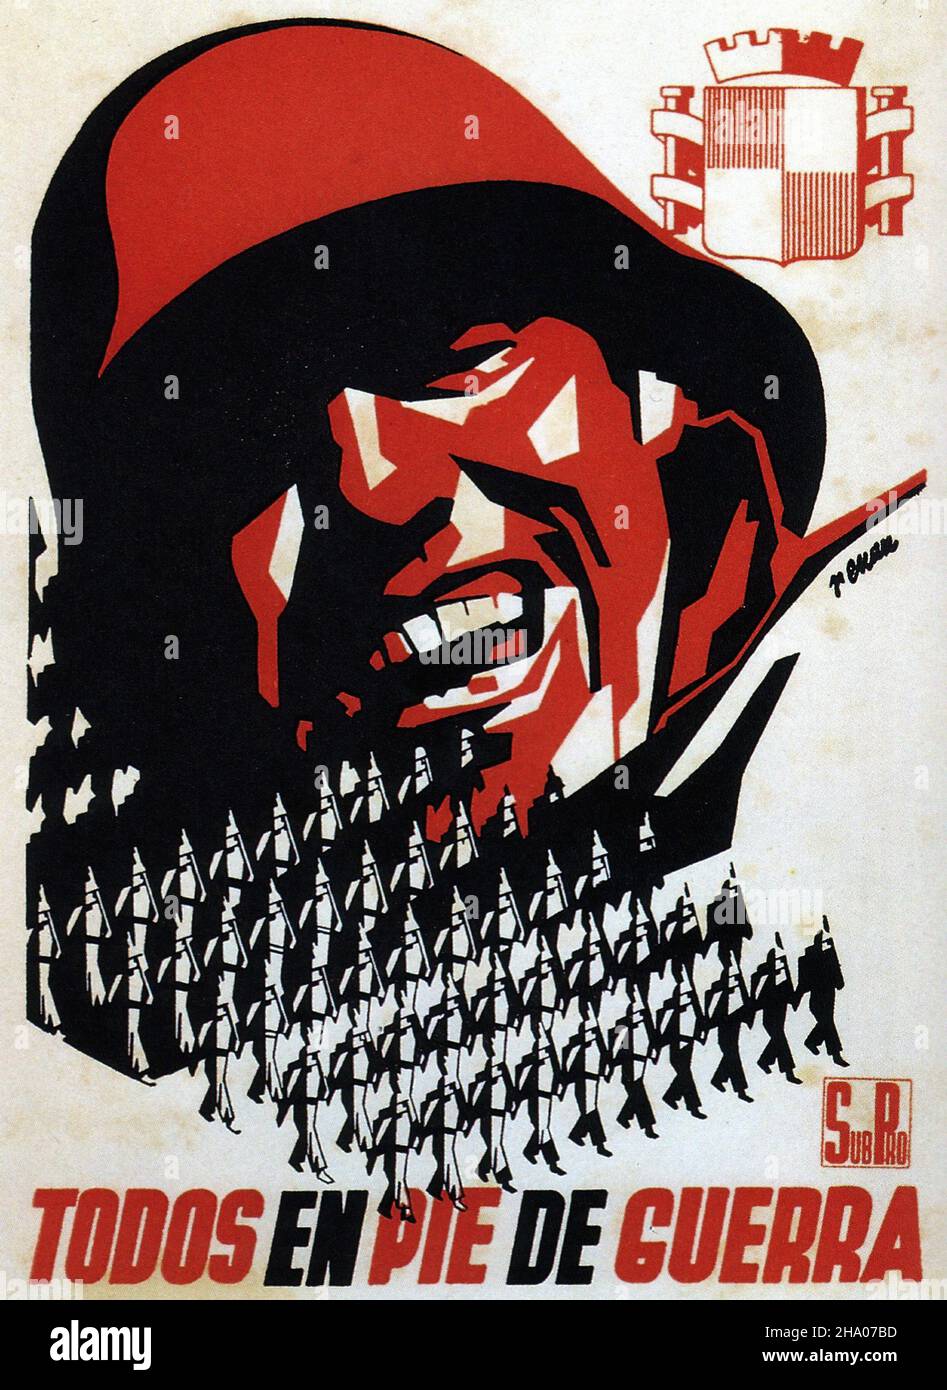 1937 Todos en Pie de Guerra - affiche de propagande sur la guerre civile espagnole (Guerra civil Española) Banque D'Images